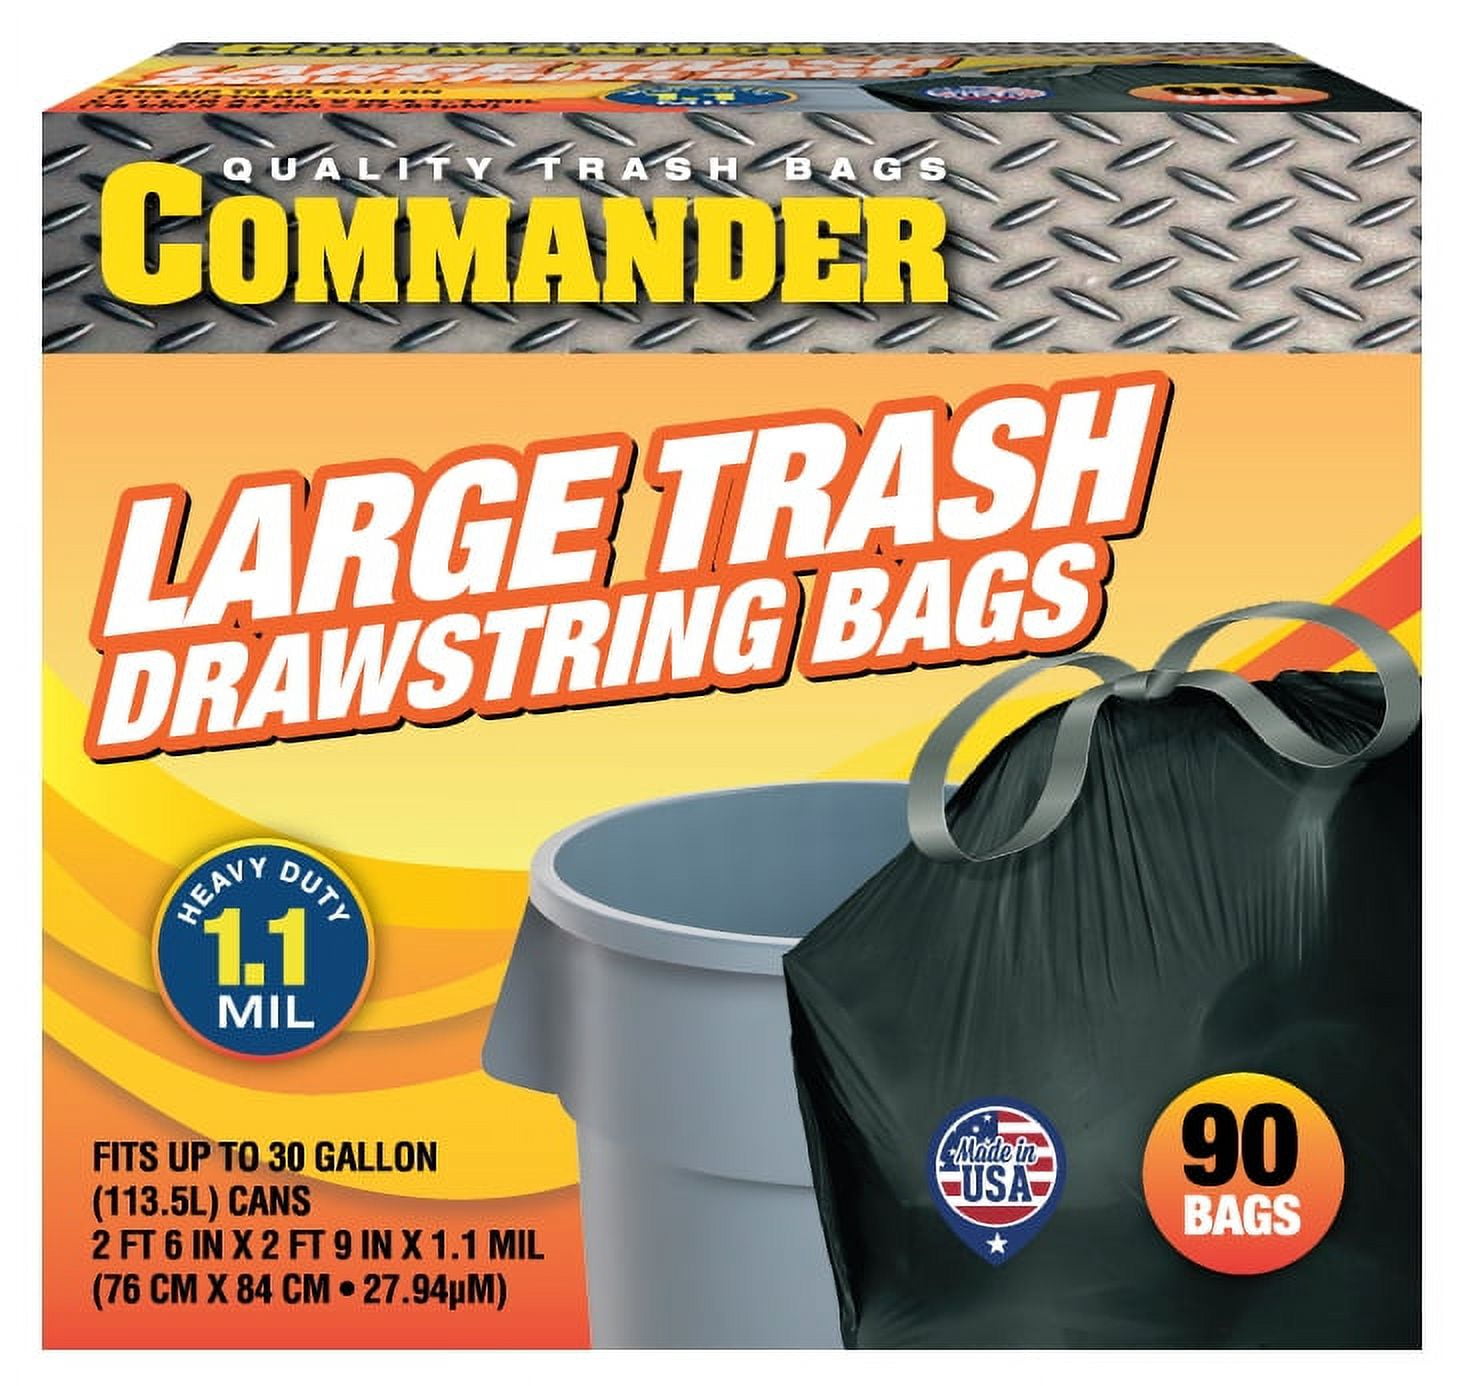 Qualiazero 21 Gallon Drawstring Trash Bag, 90 Pack, Citrus Scent